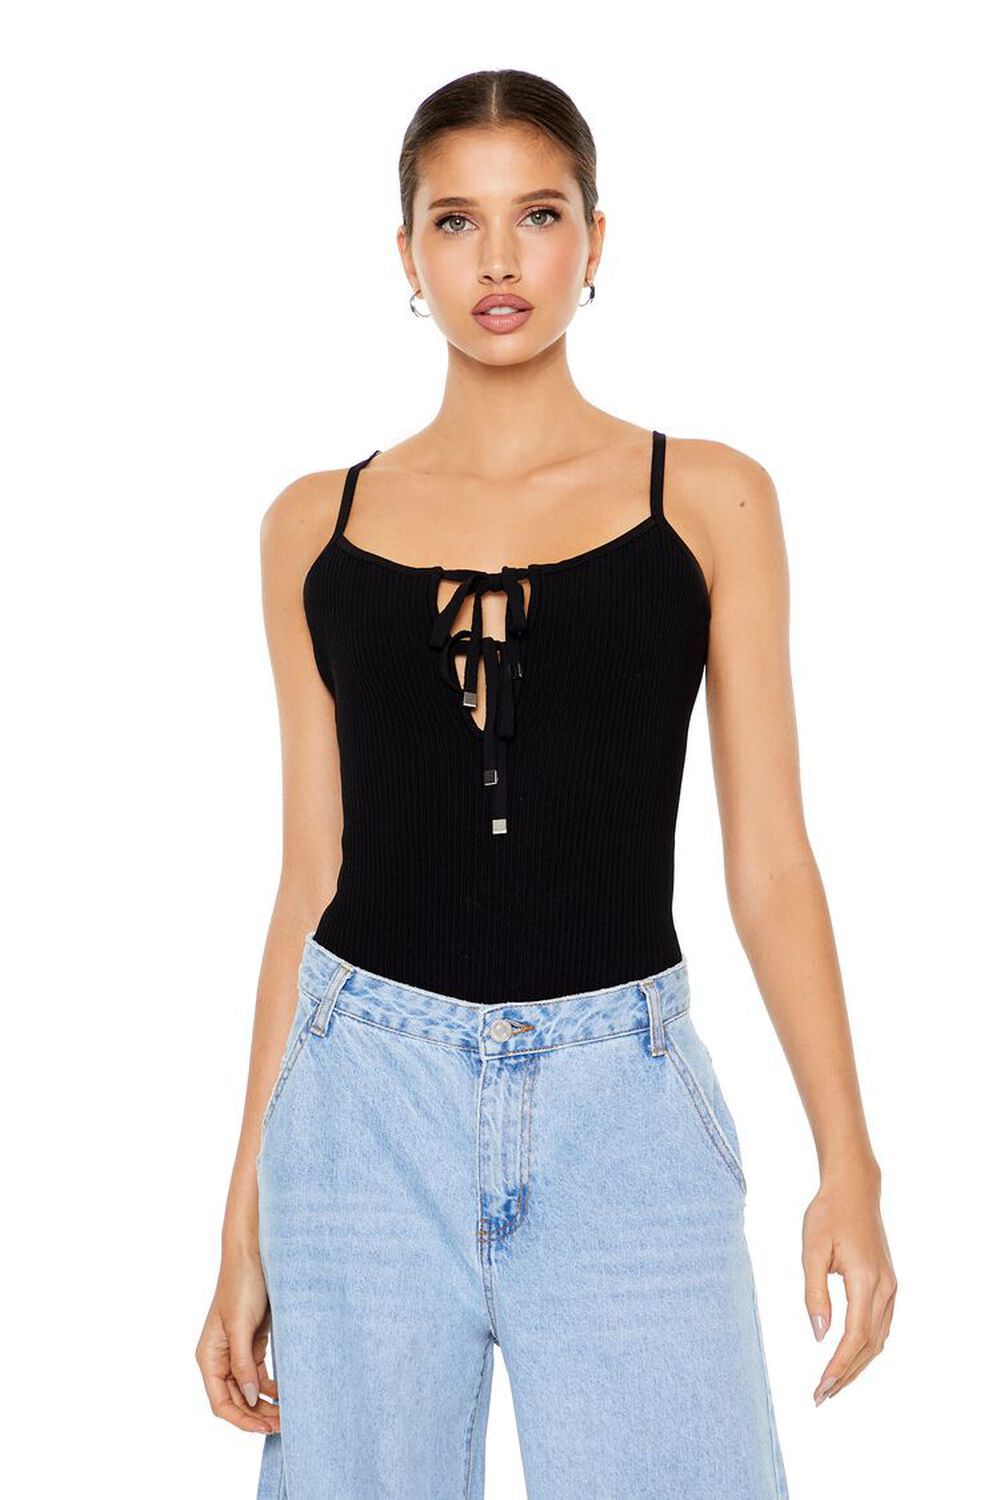 Socialite Cami Bodysuit Top Spaghetti Straps Black Women Size X